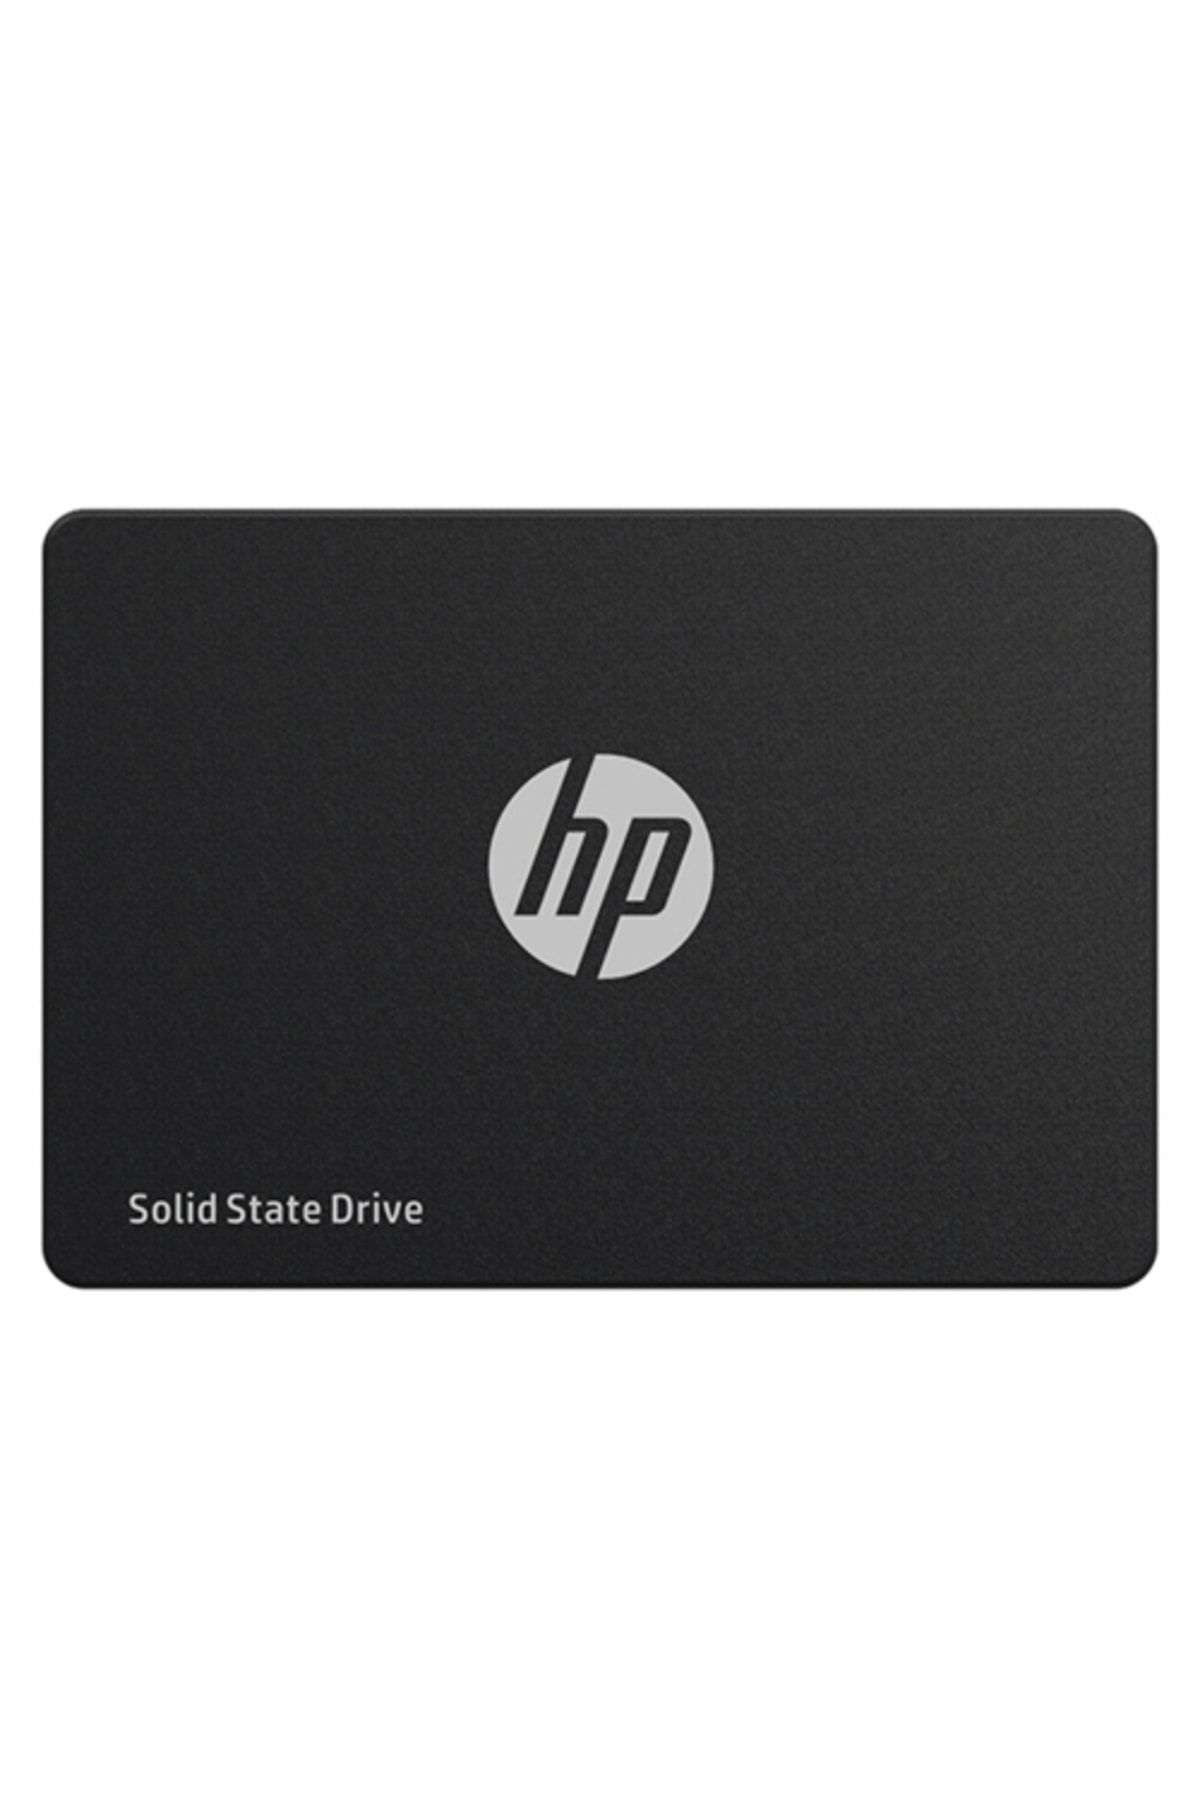 HP S650 120gb 2.5 Ssd Disk 345m7aa